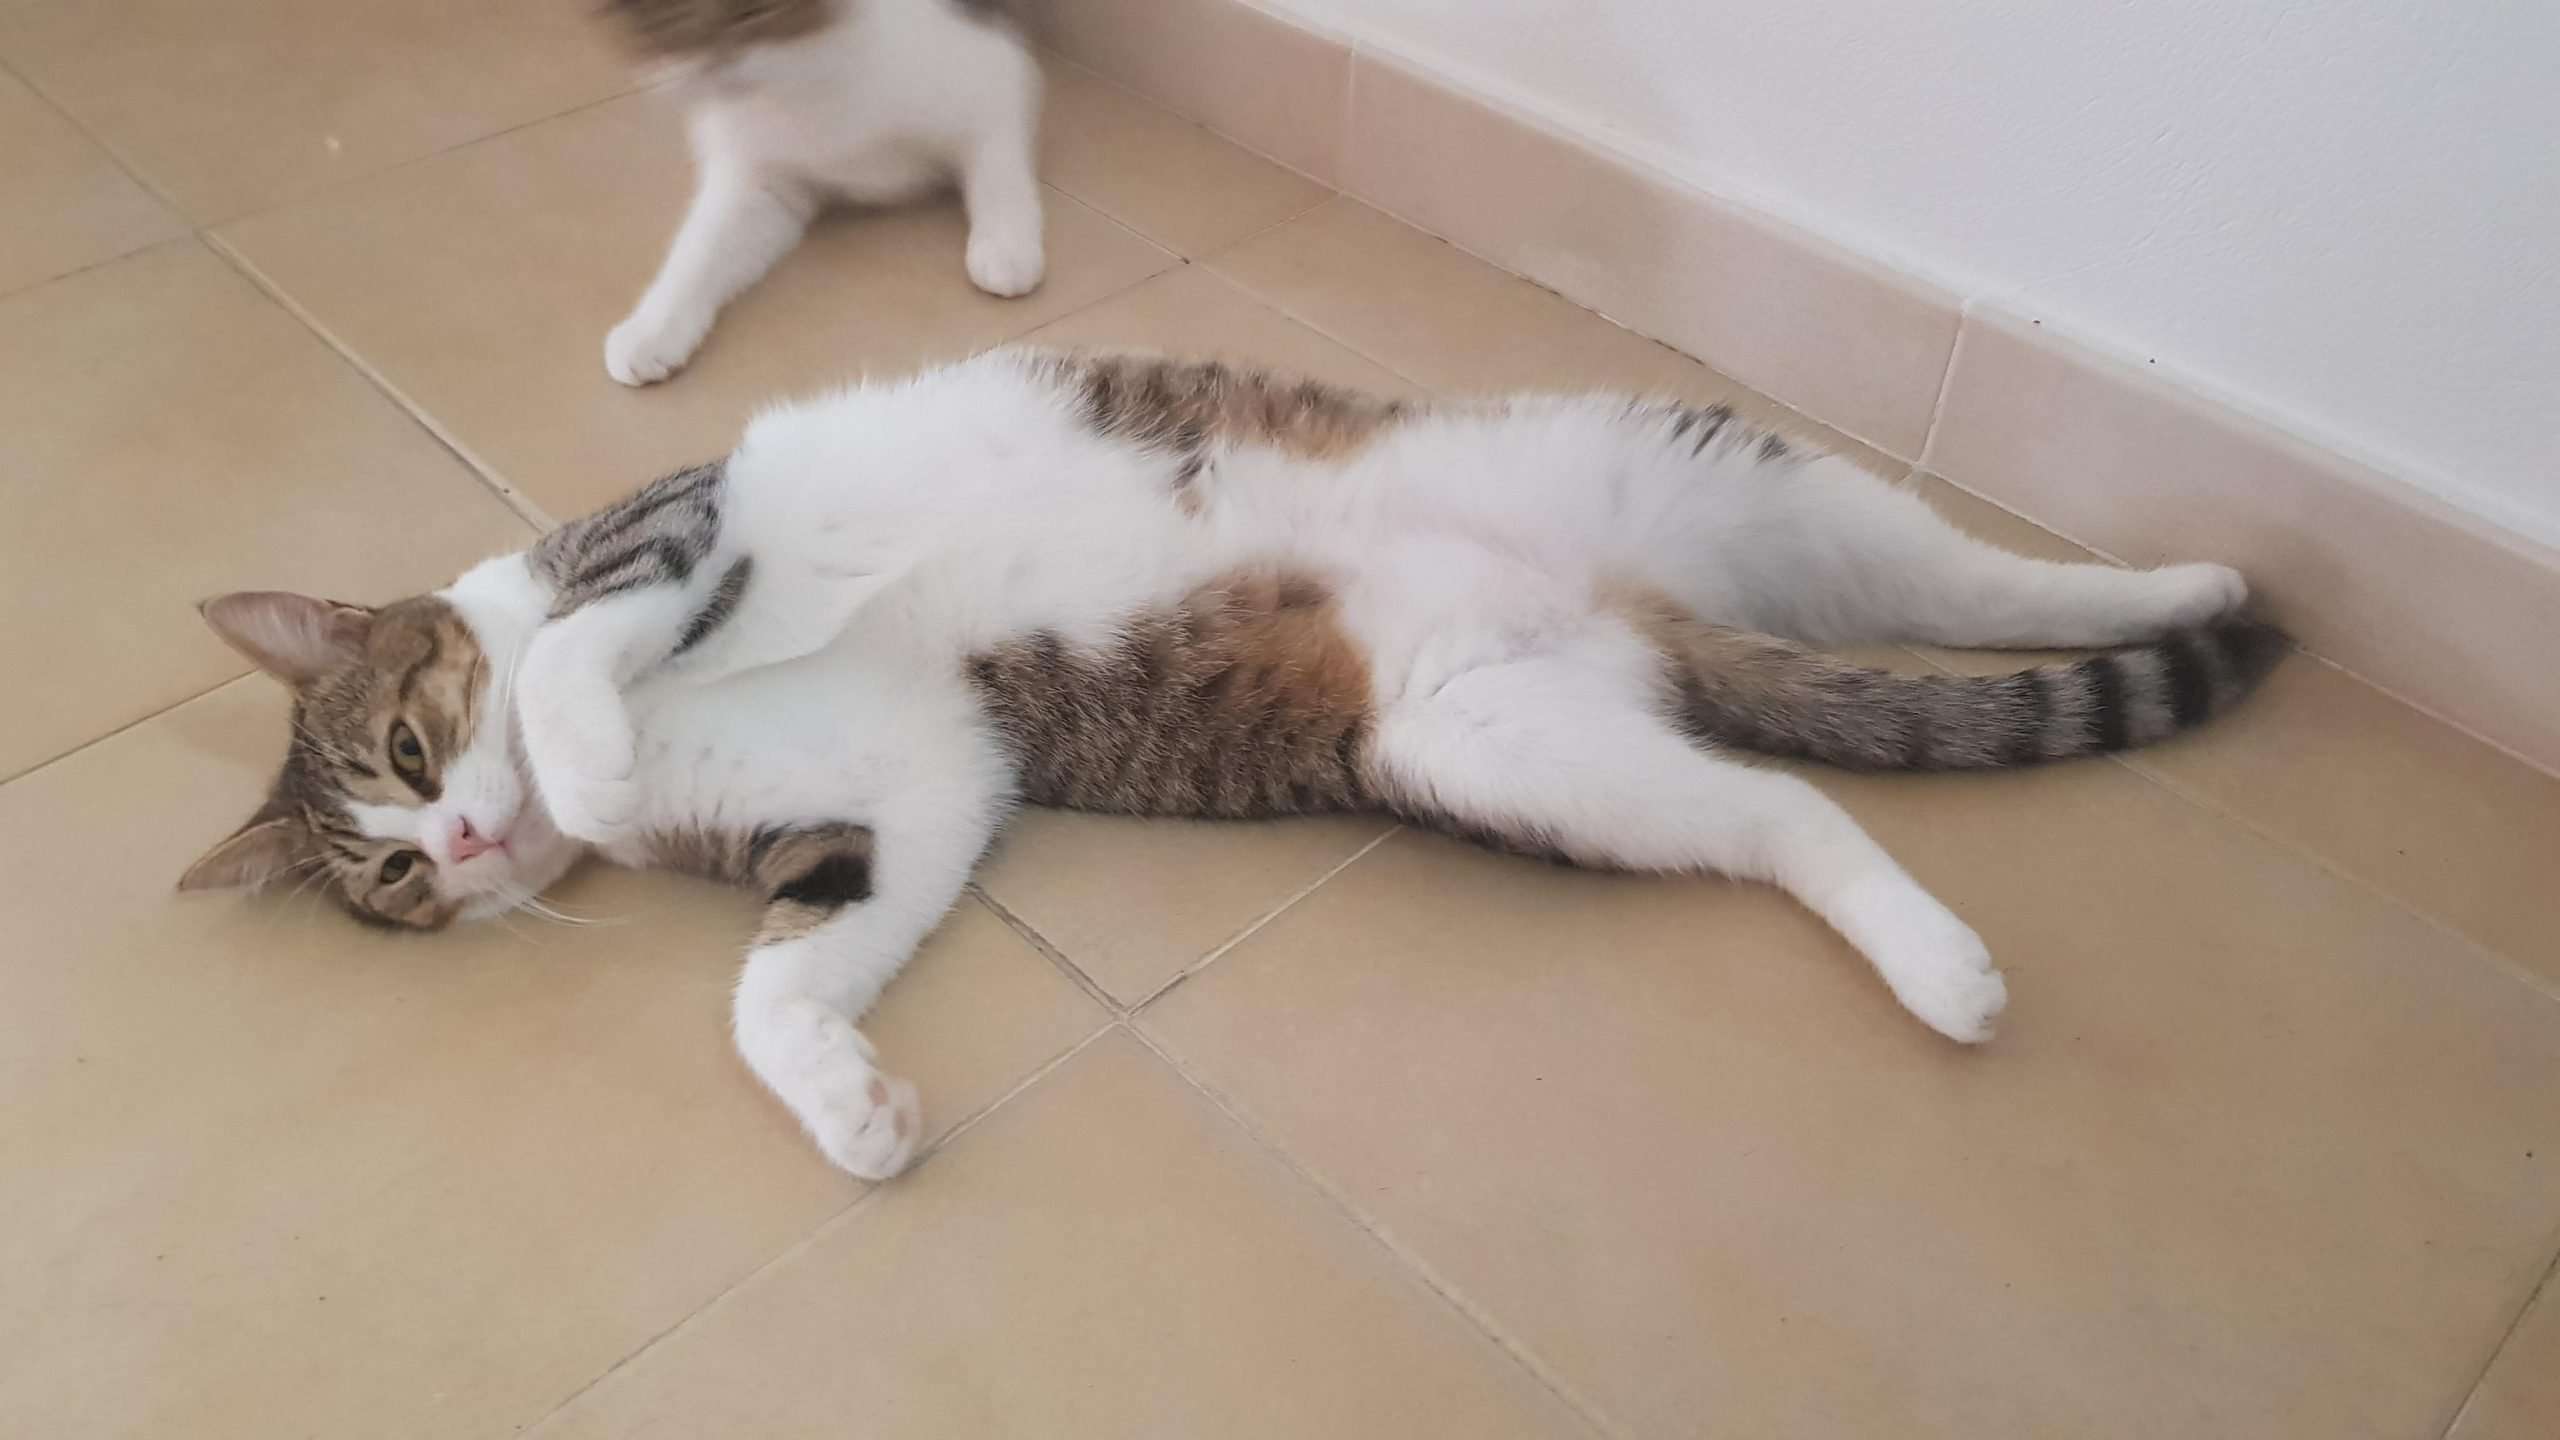 Is too hot! : cat